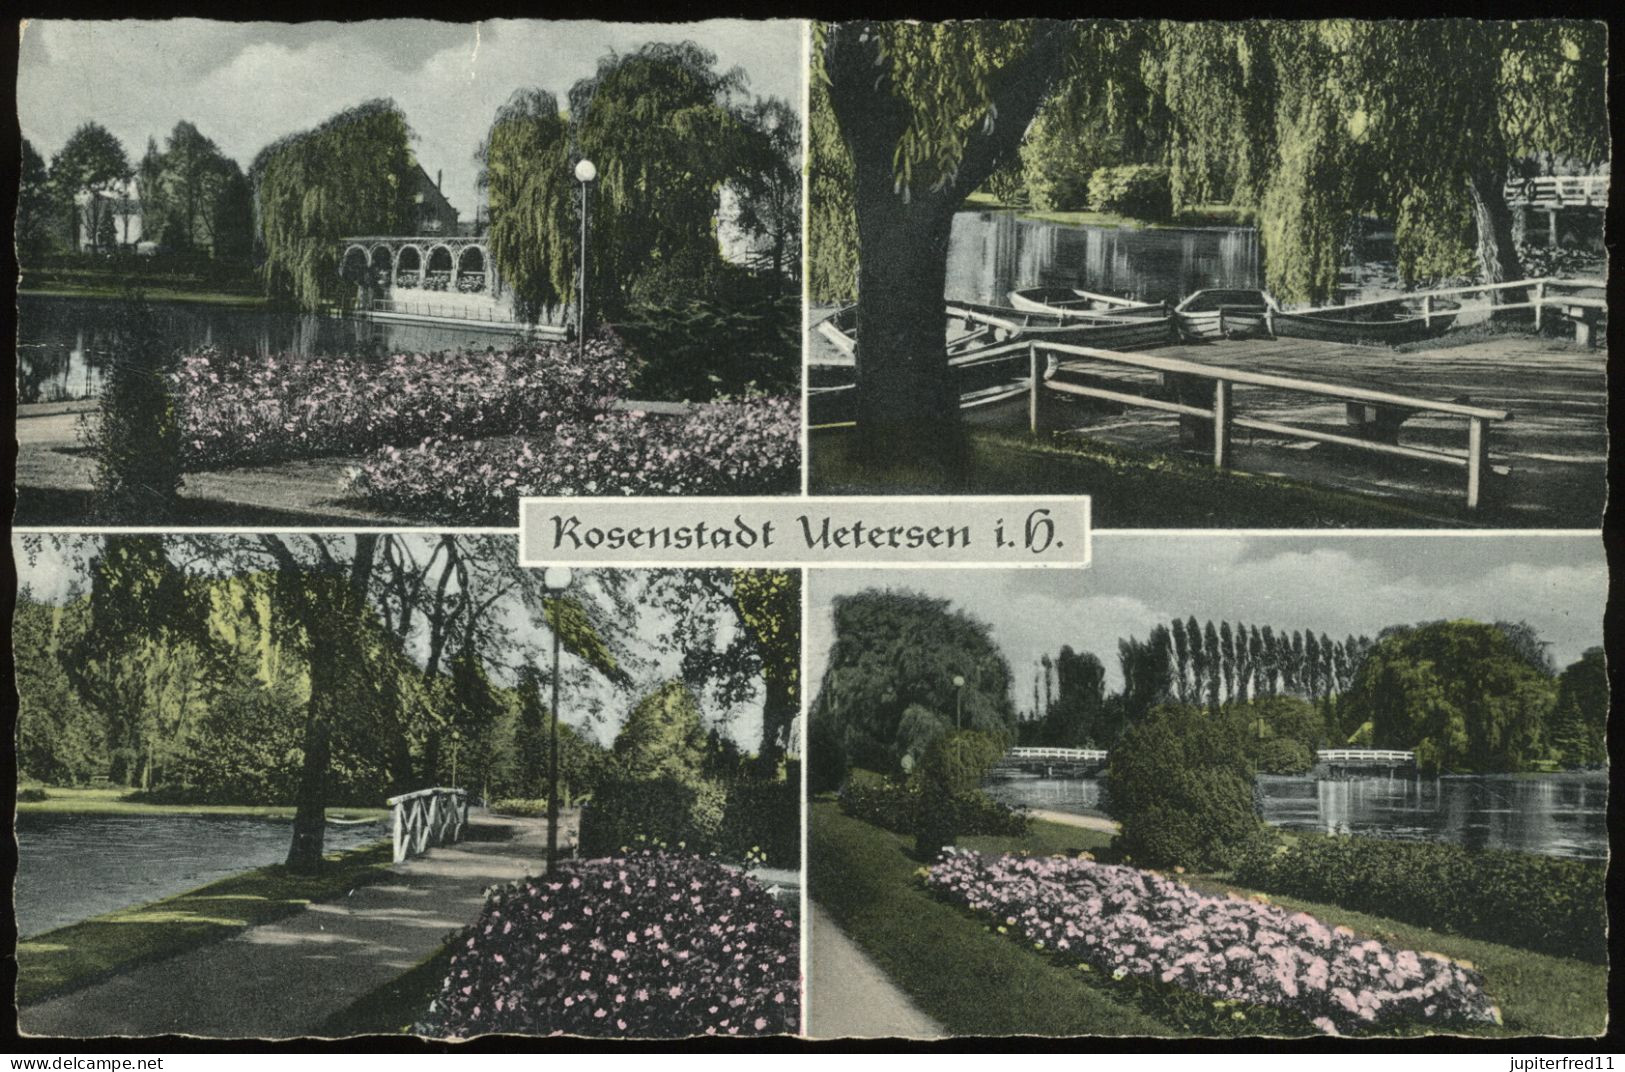 (B3549) AK Uetersen (Kreis Pinneberg), Rosarium 1955 - Uetersen